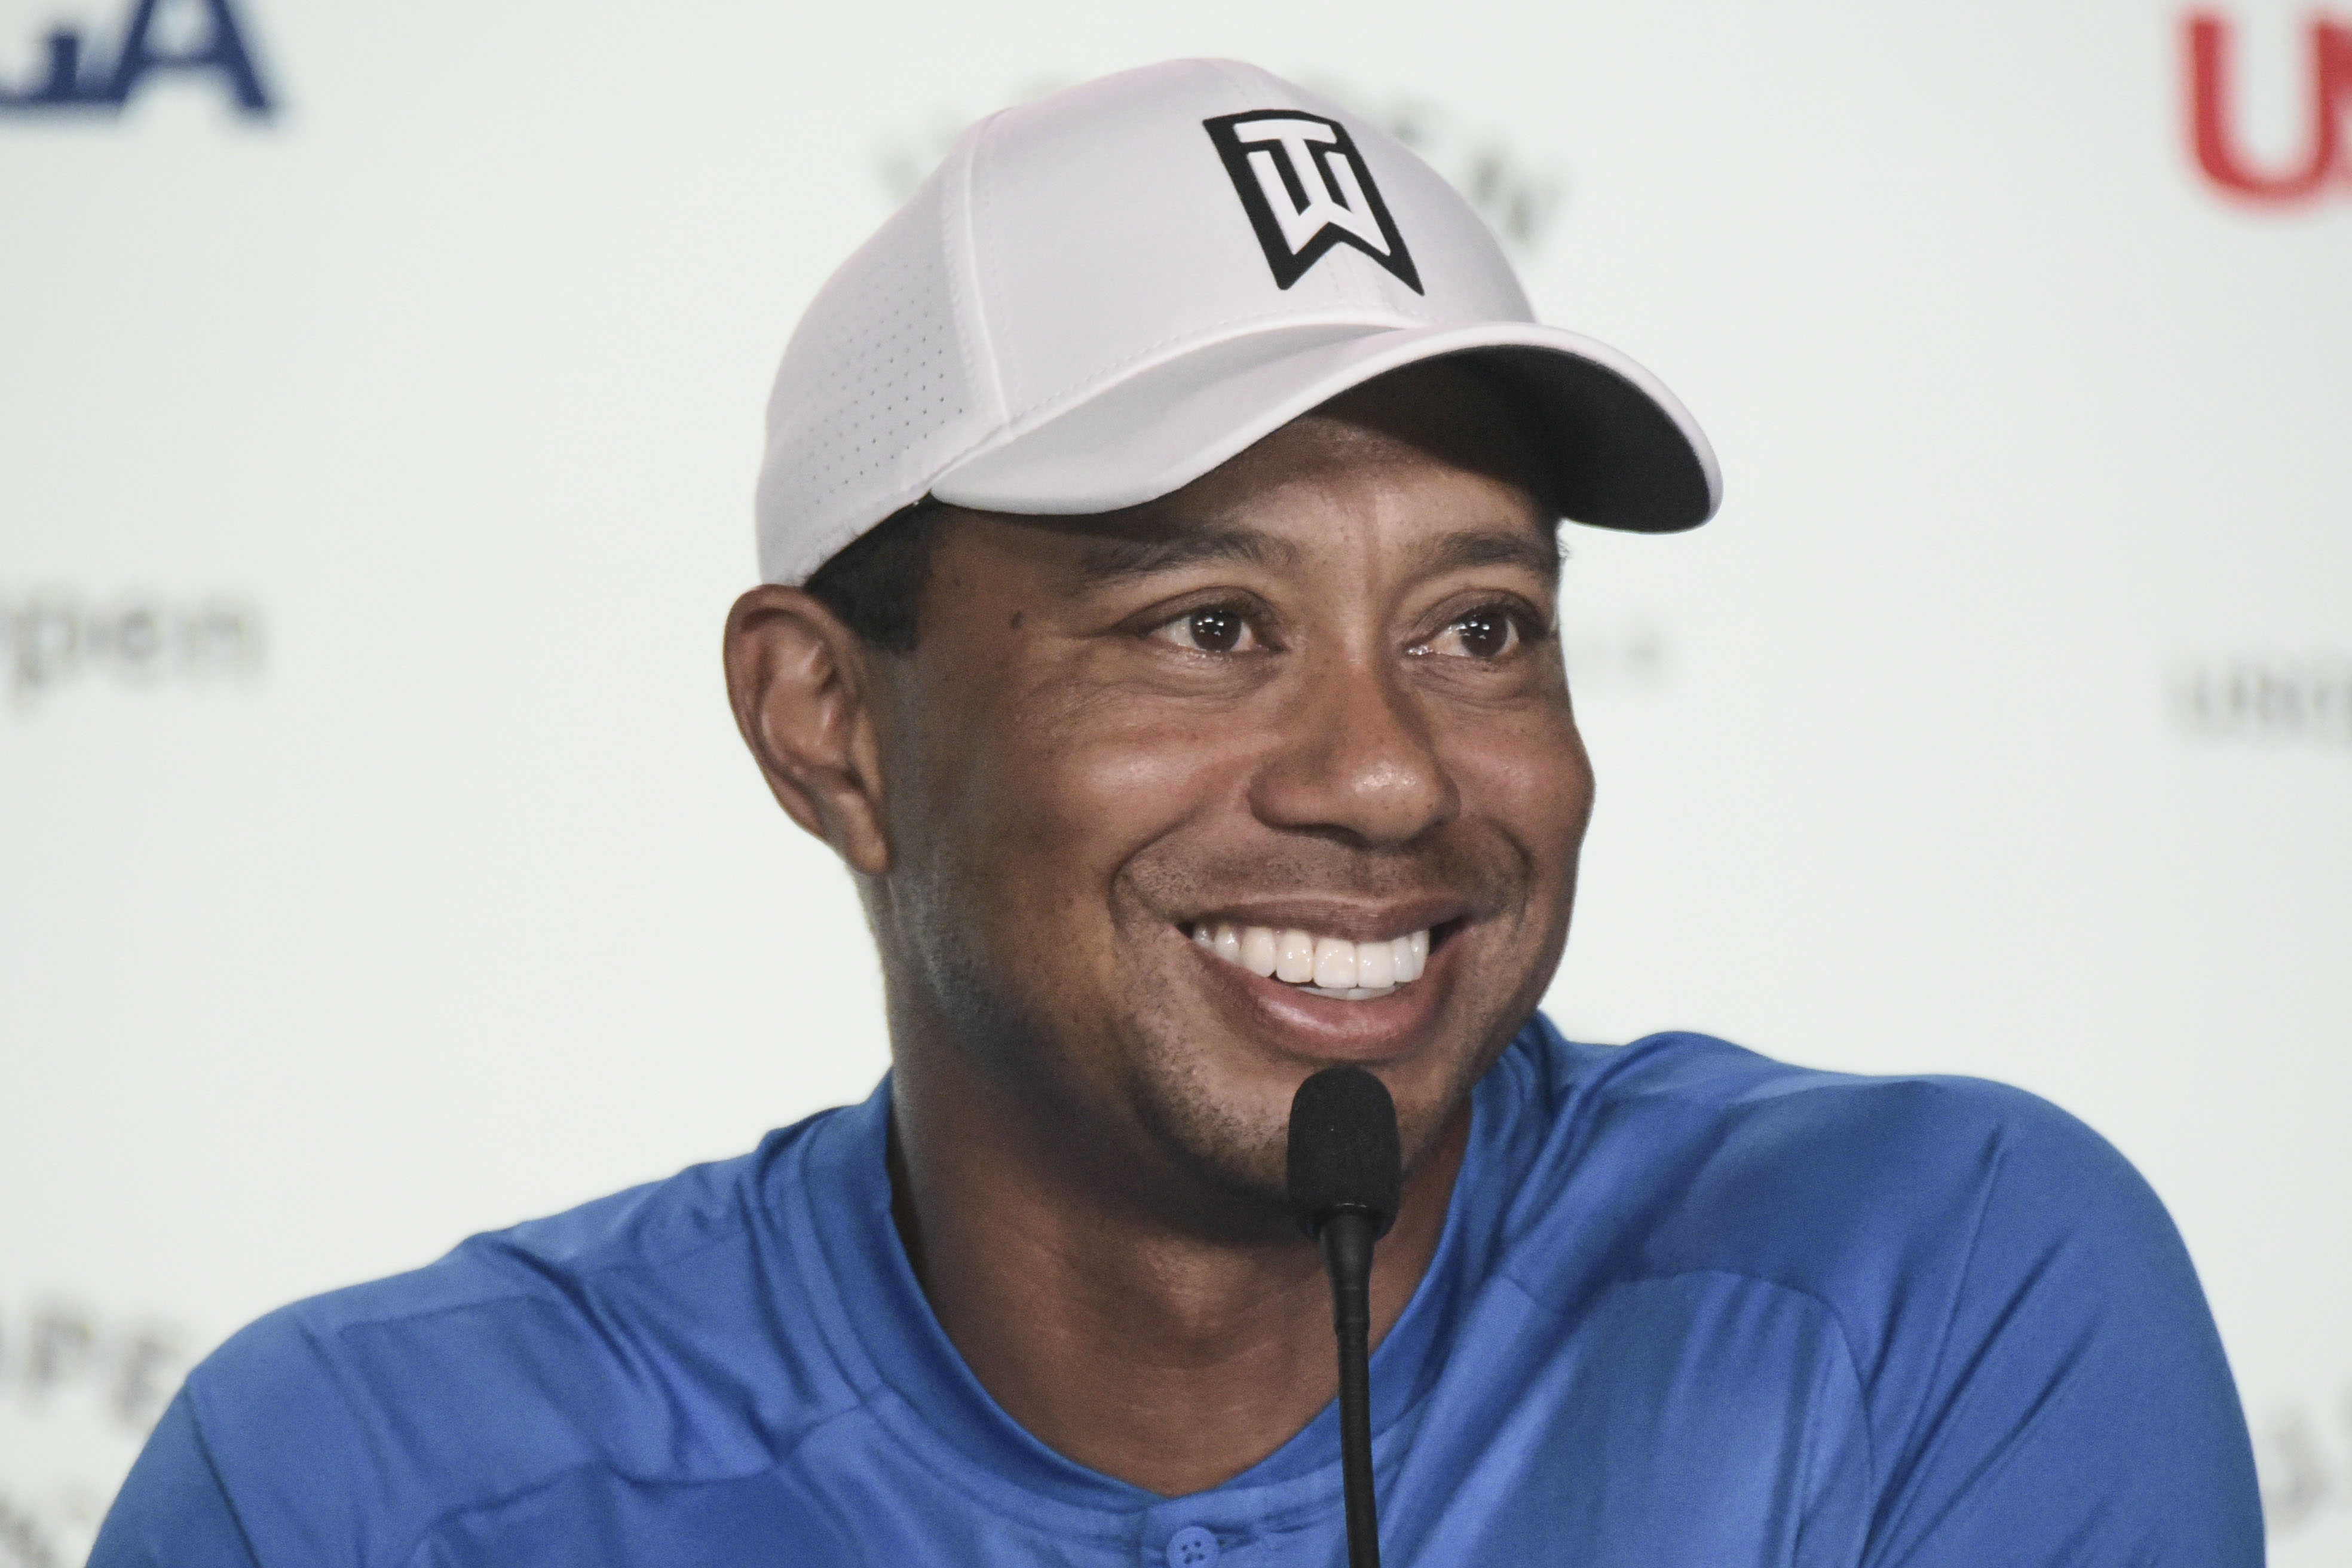 Tiger Woods - 2018 US OPEN Golf